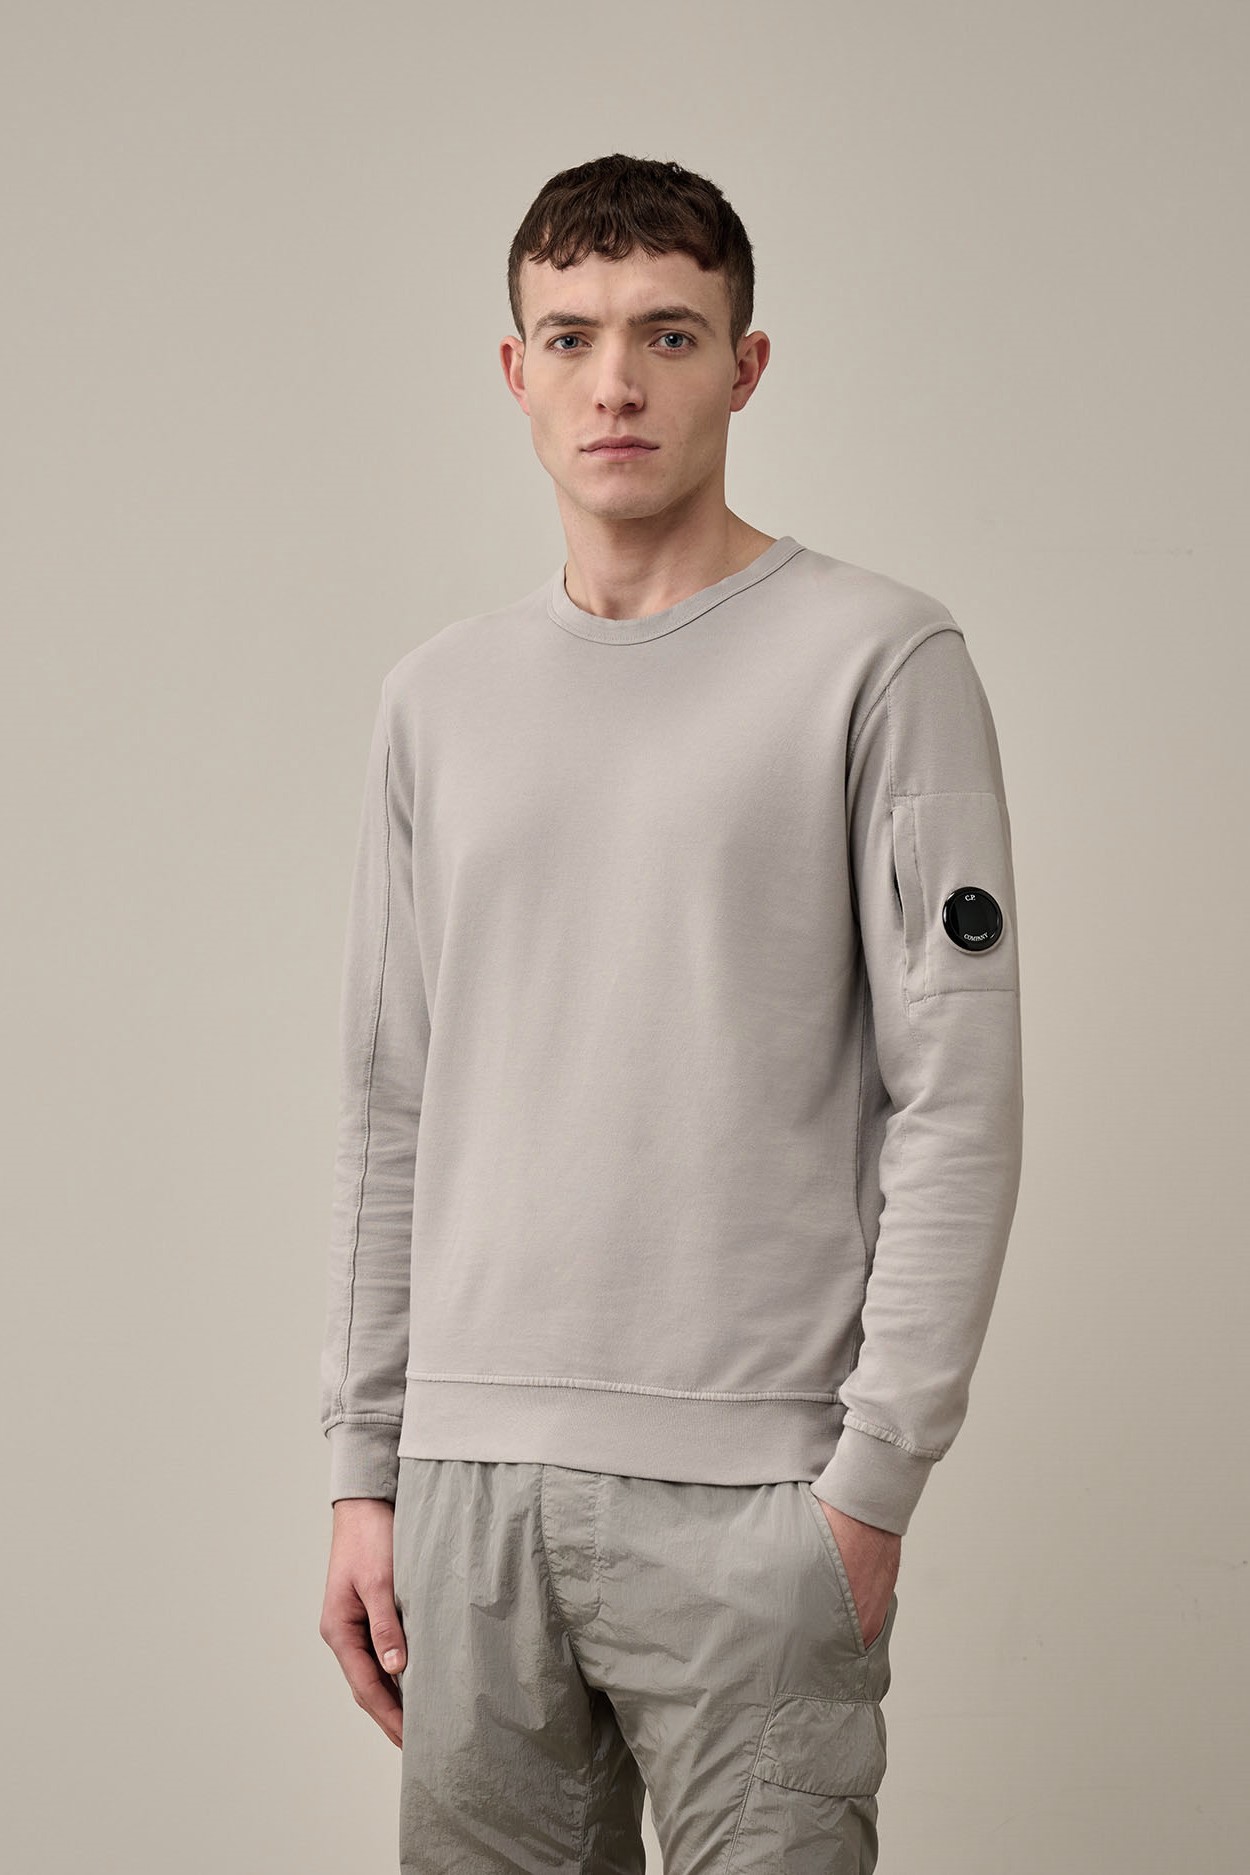 C.P. COMPANY Light Fleece Sweatshirt in Drizzle Grey M